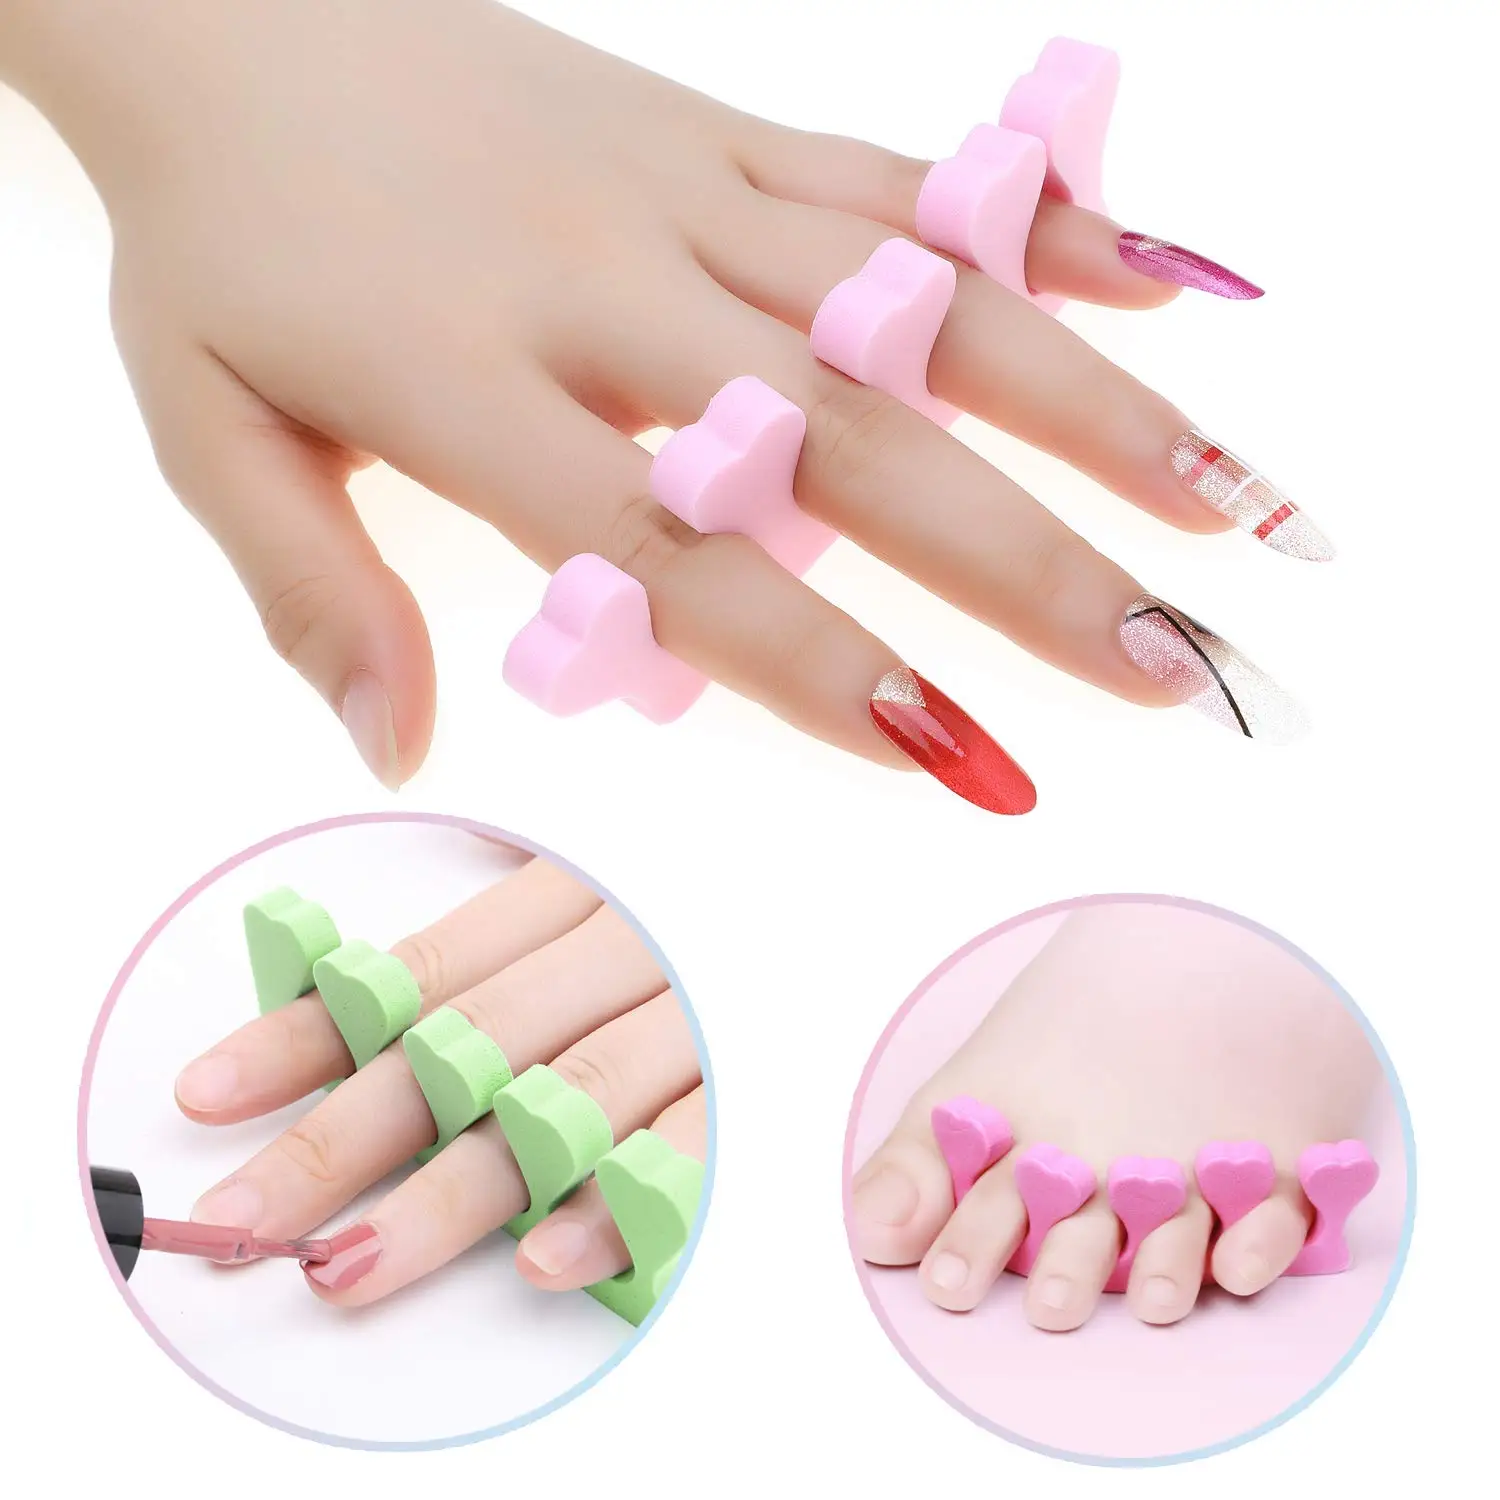 

50 Pack Nail Art Toes Separators Fingers Random Color Soft Sponge UV Gel Polish Beauty Manicure Pedicure Tools